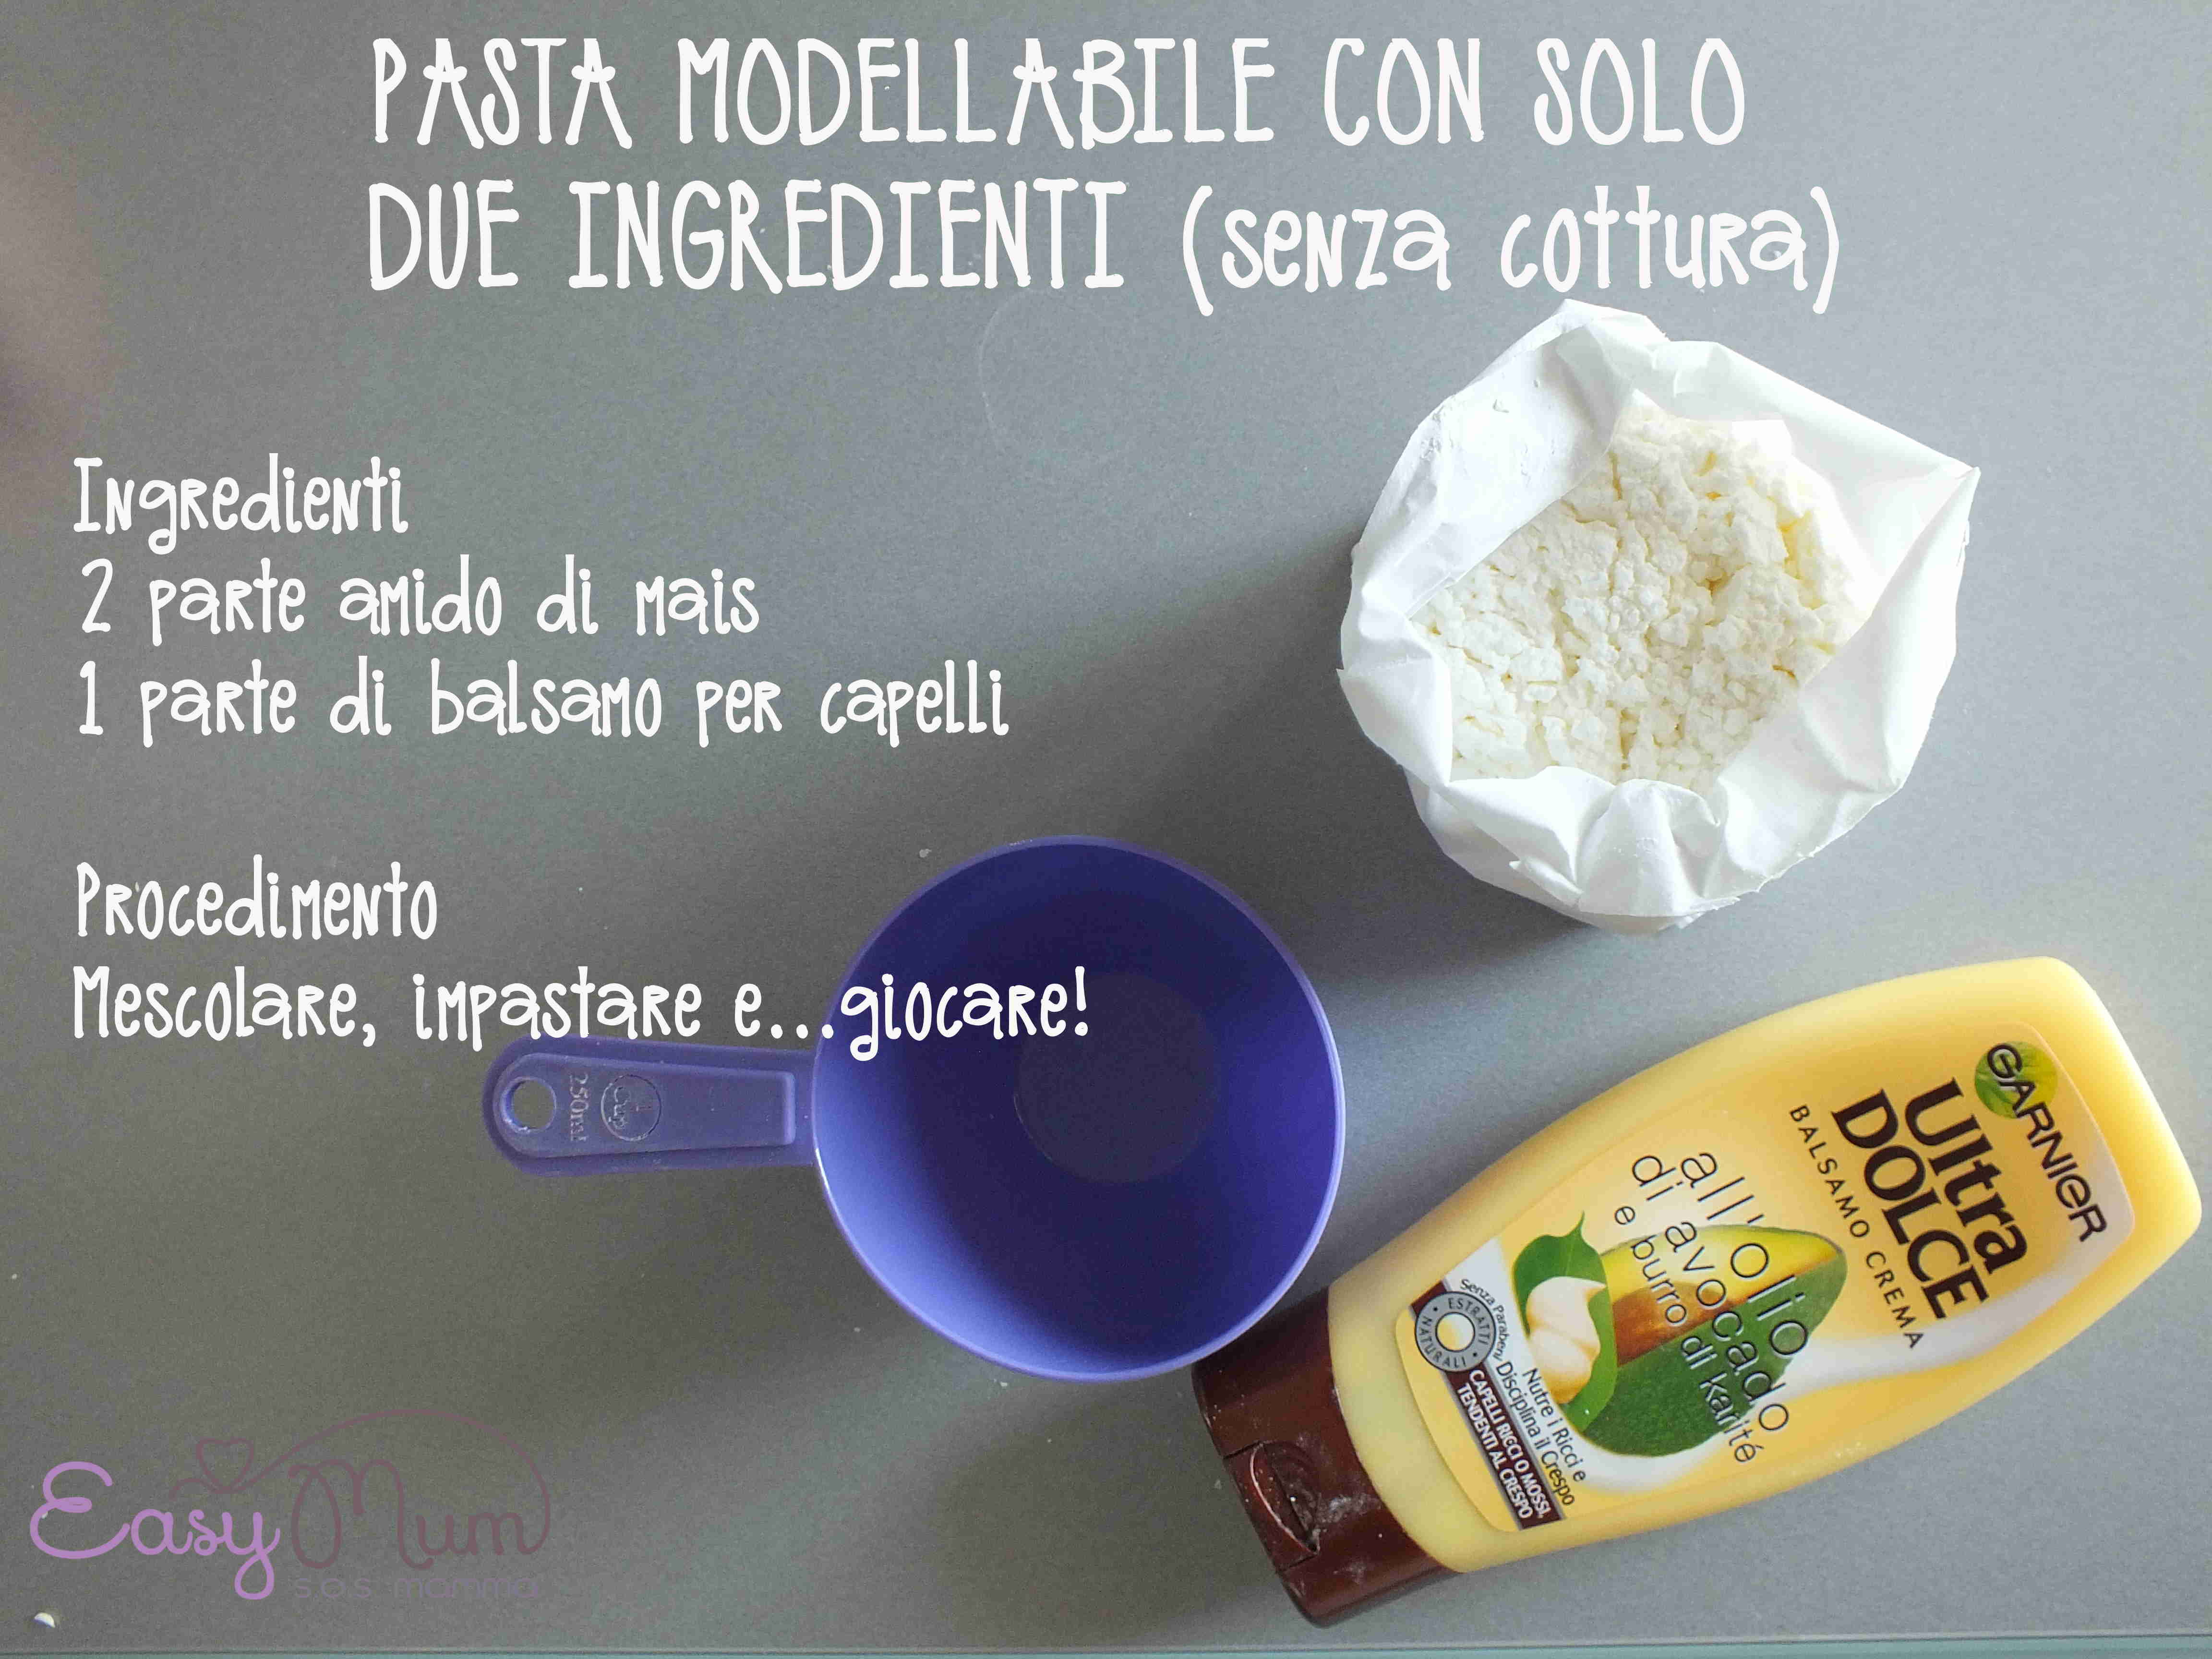 Pasta modellabile con solo due ingredienti - Easy Mum